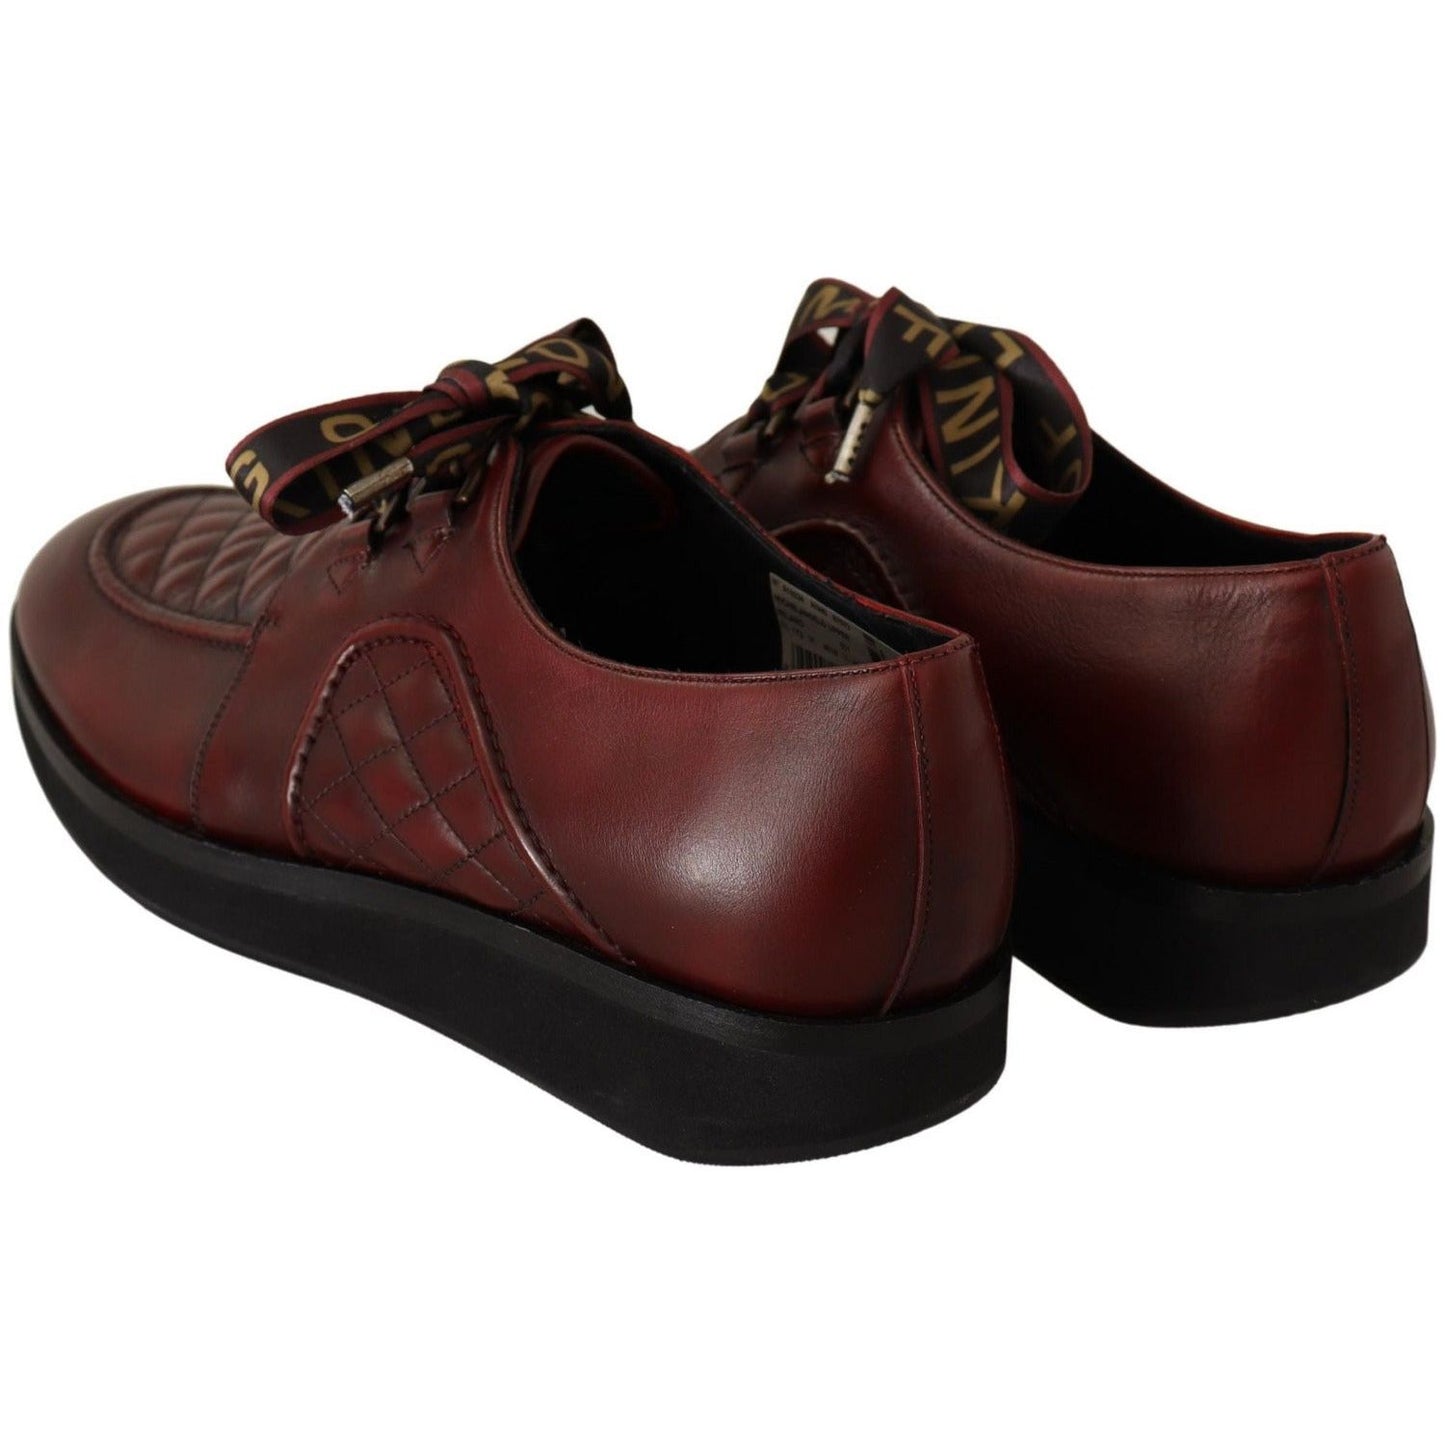 Dolce & Gabbana Elegant Bordeaux Derby Leather Shoes red-leather-lace-up-dress-formal-shoes Dress Shoes